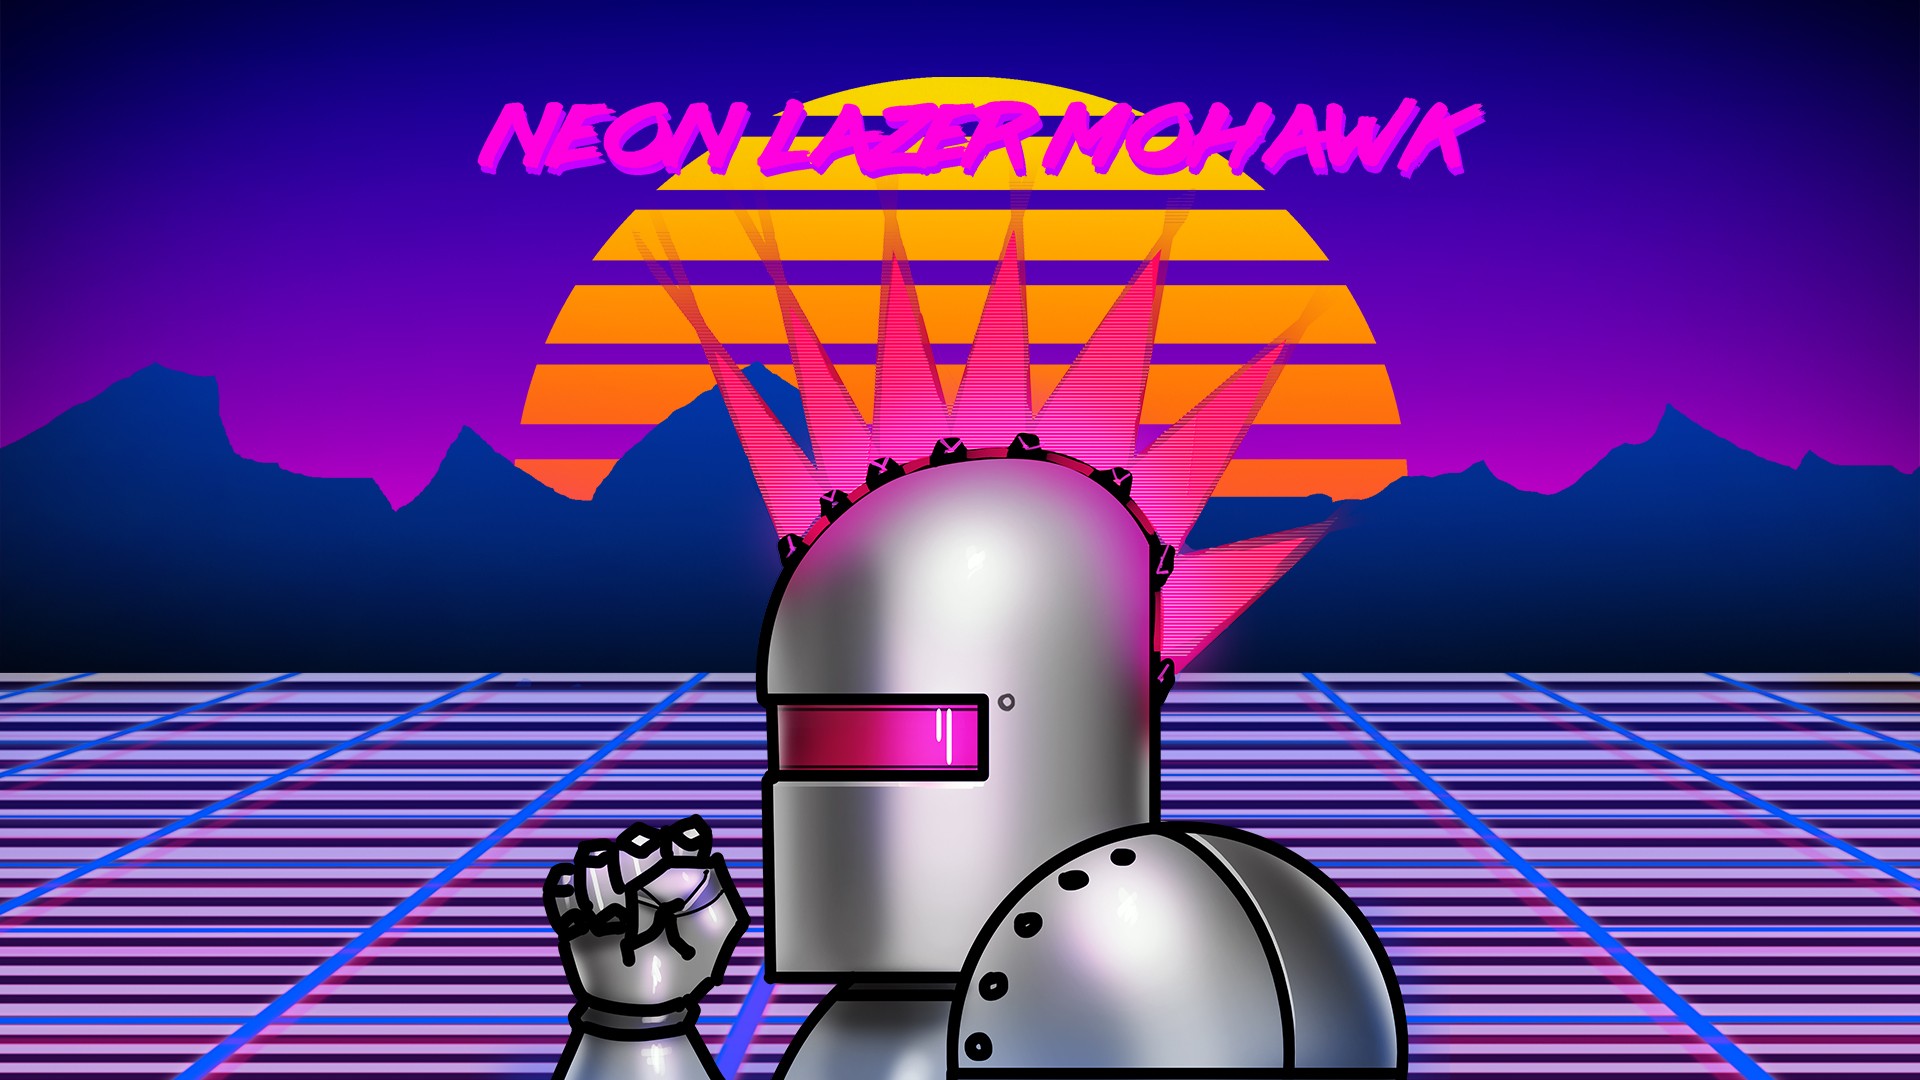 Neon Lazer Mohawk, 1980s, Retro games, Robot, Grid, Digital art, Sunset, Sun, Colorful, Text Wallpaper